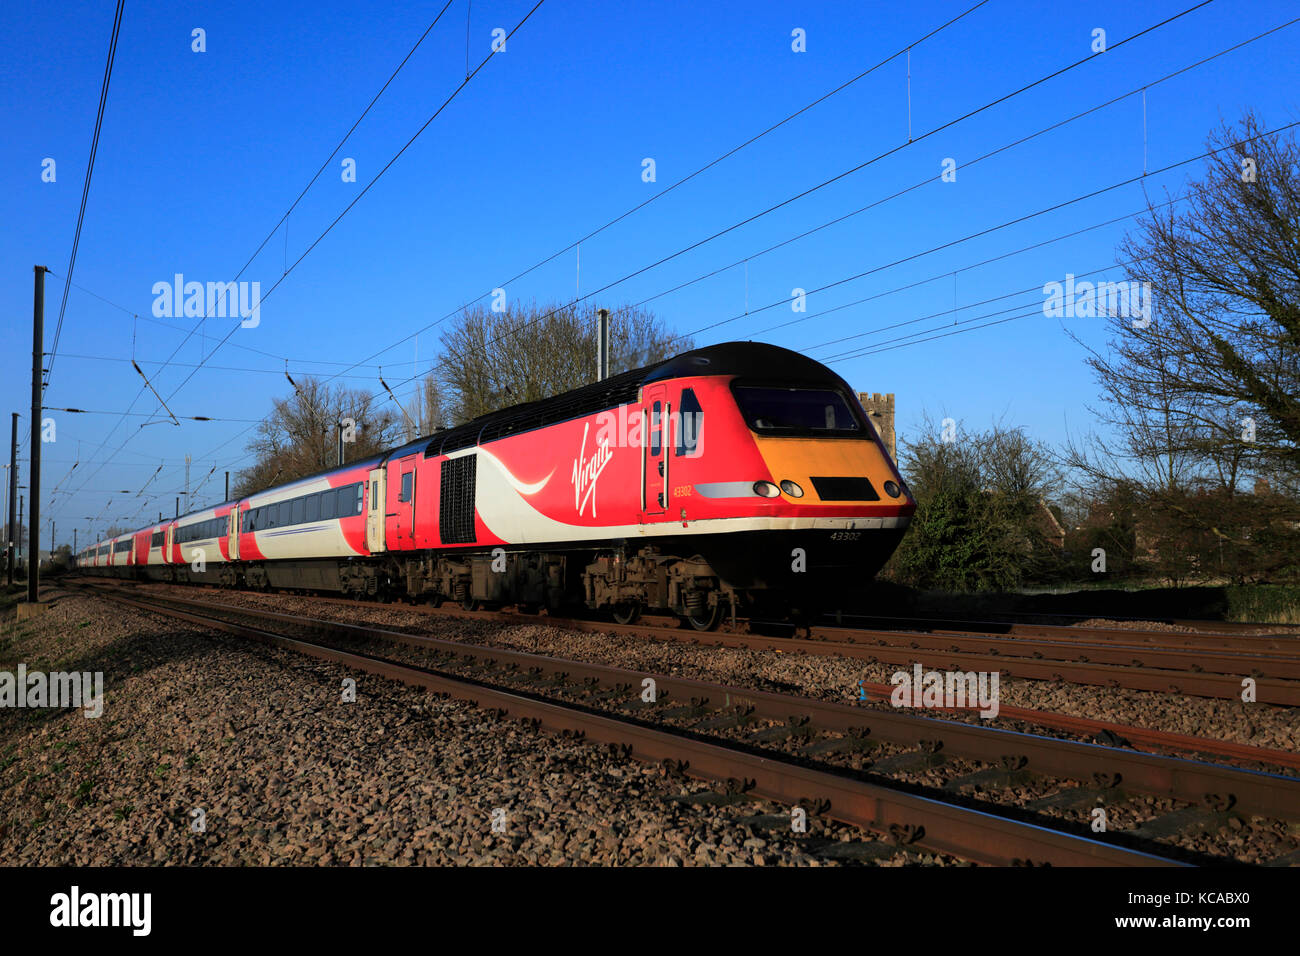 43302, Virgin Trains, Offord Cluny village, East Coast Main Line Railway, Peterborough, Cambridgeshire, England, UK Stock Photo